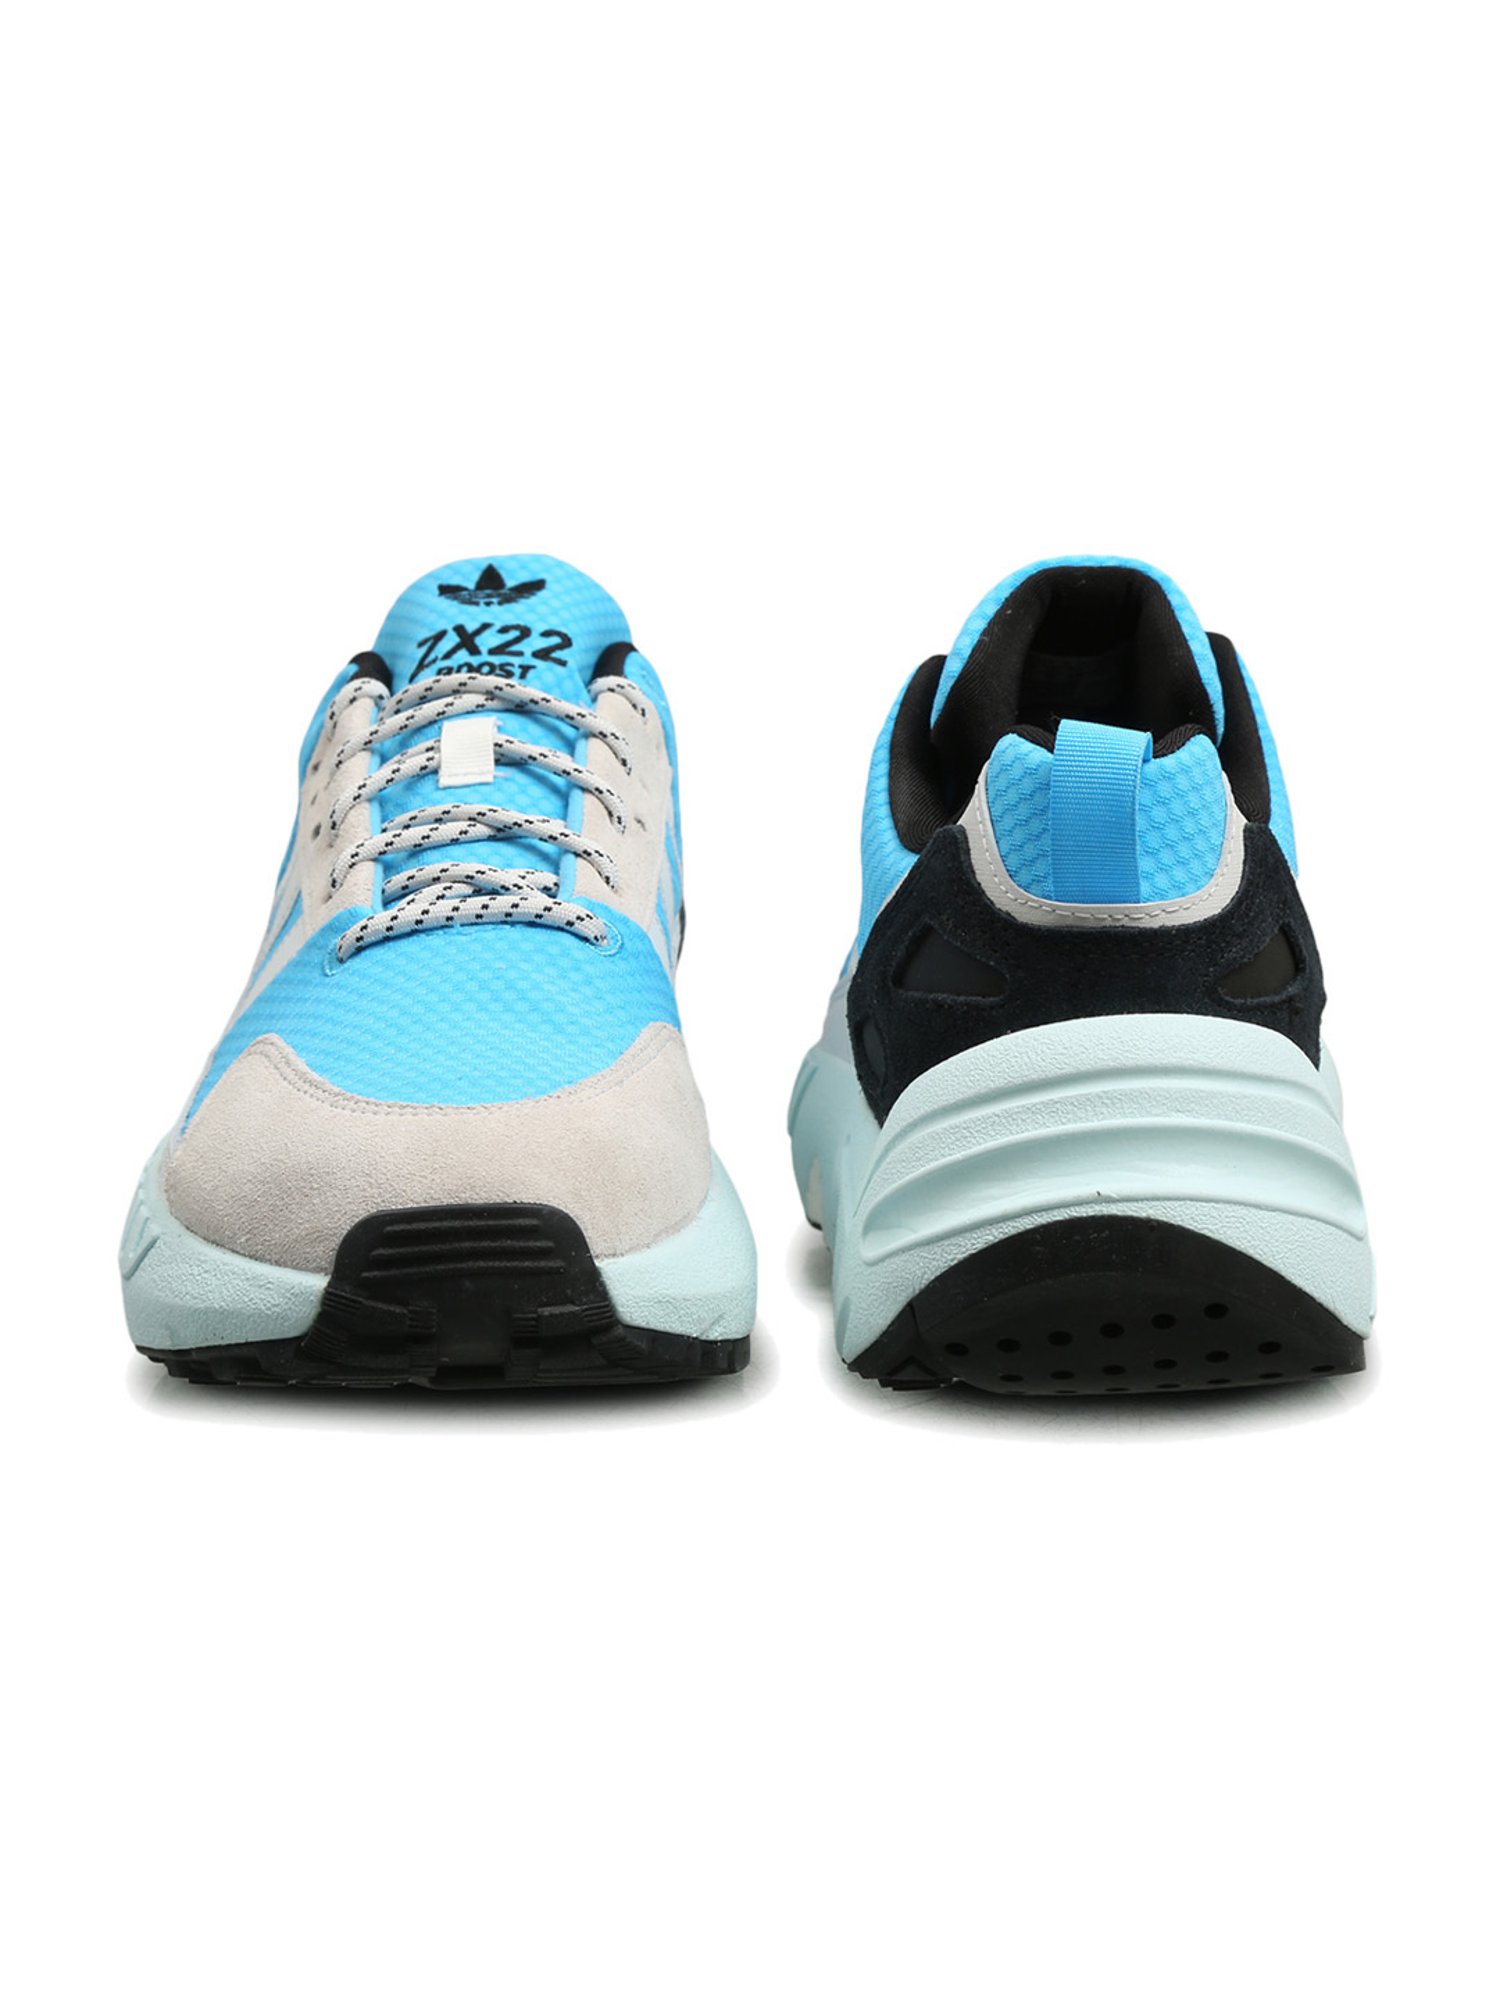 Buy adidas Originals Men's ZX 22 BOOST Blue Casual Sneakers for 